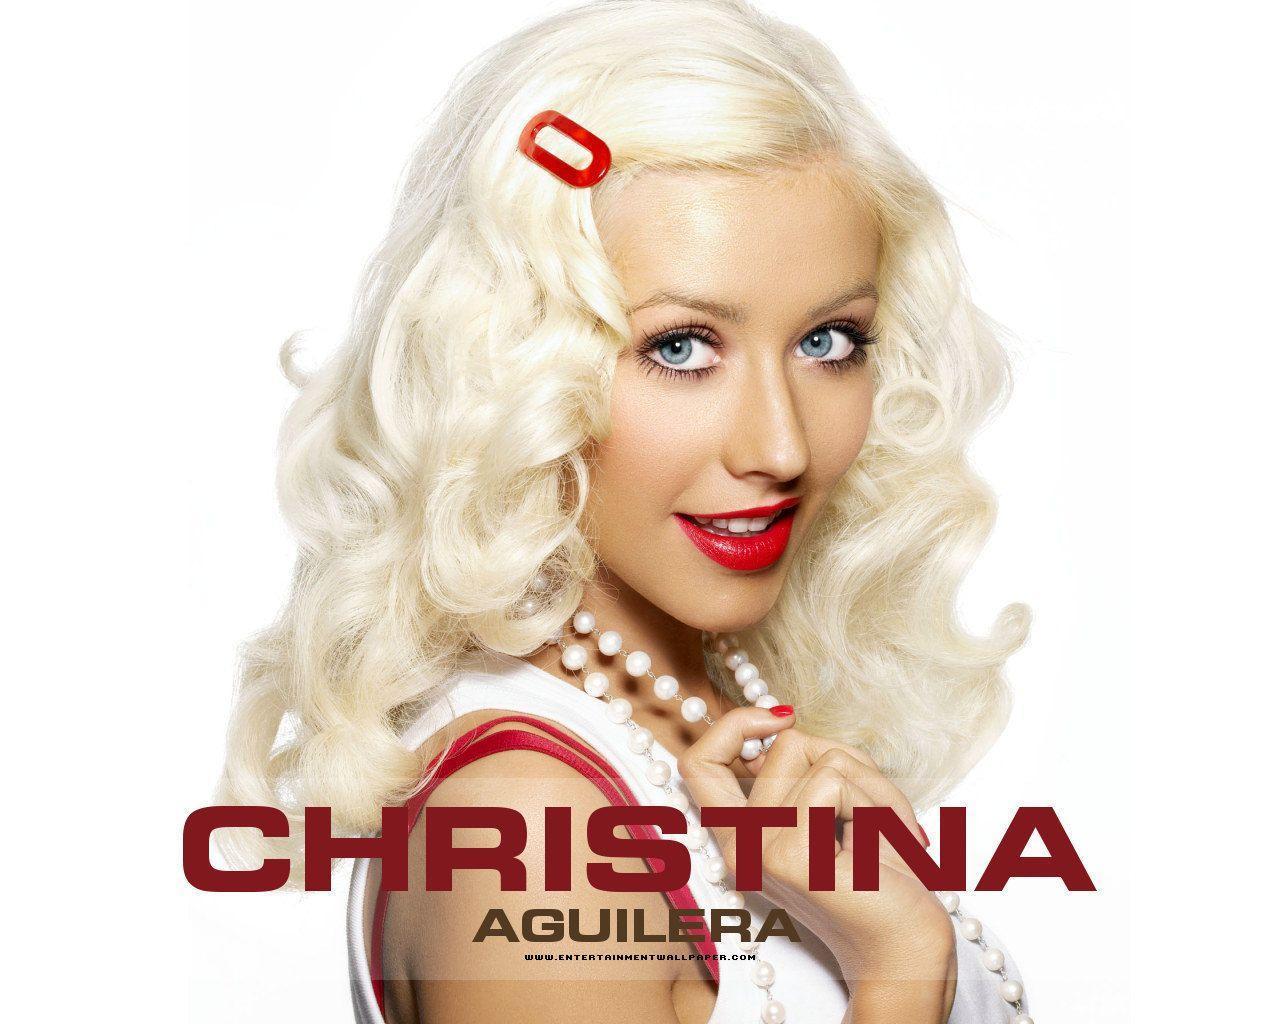 Wallpaper HighLights: Christina Aguilera Wallpaper